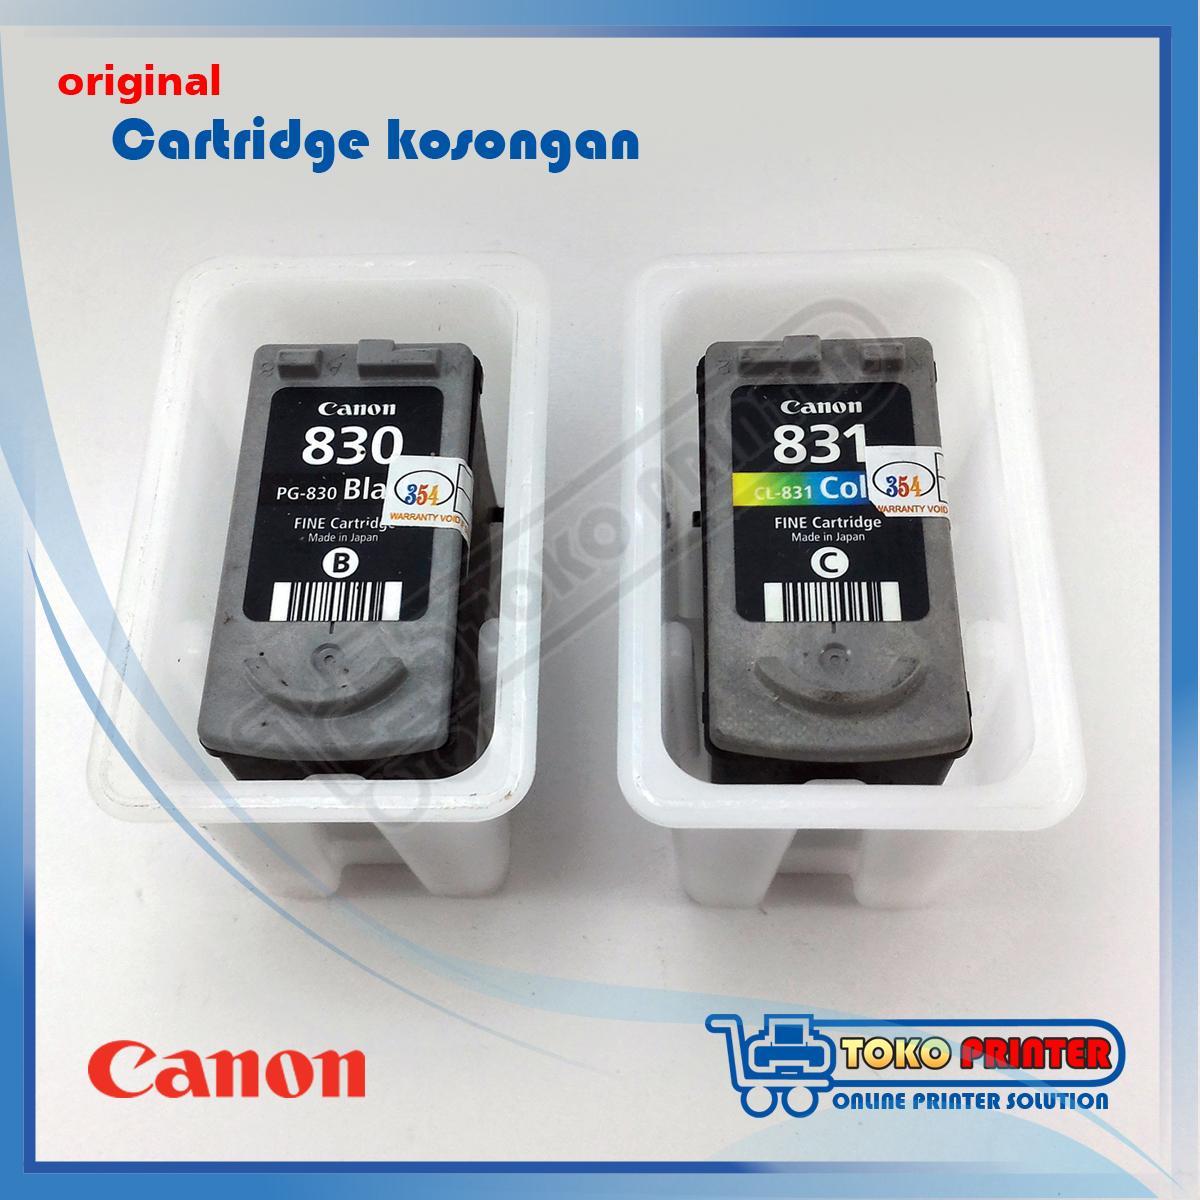 Cartridge Kosongan Canon PG-830 & CL-831